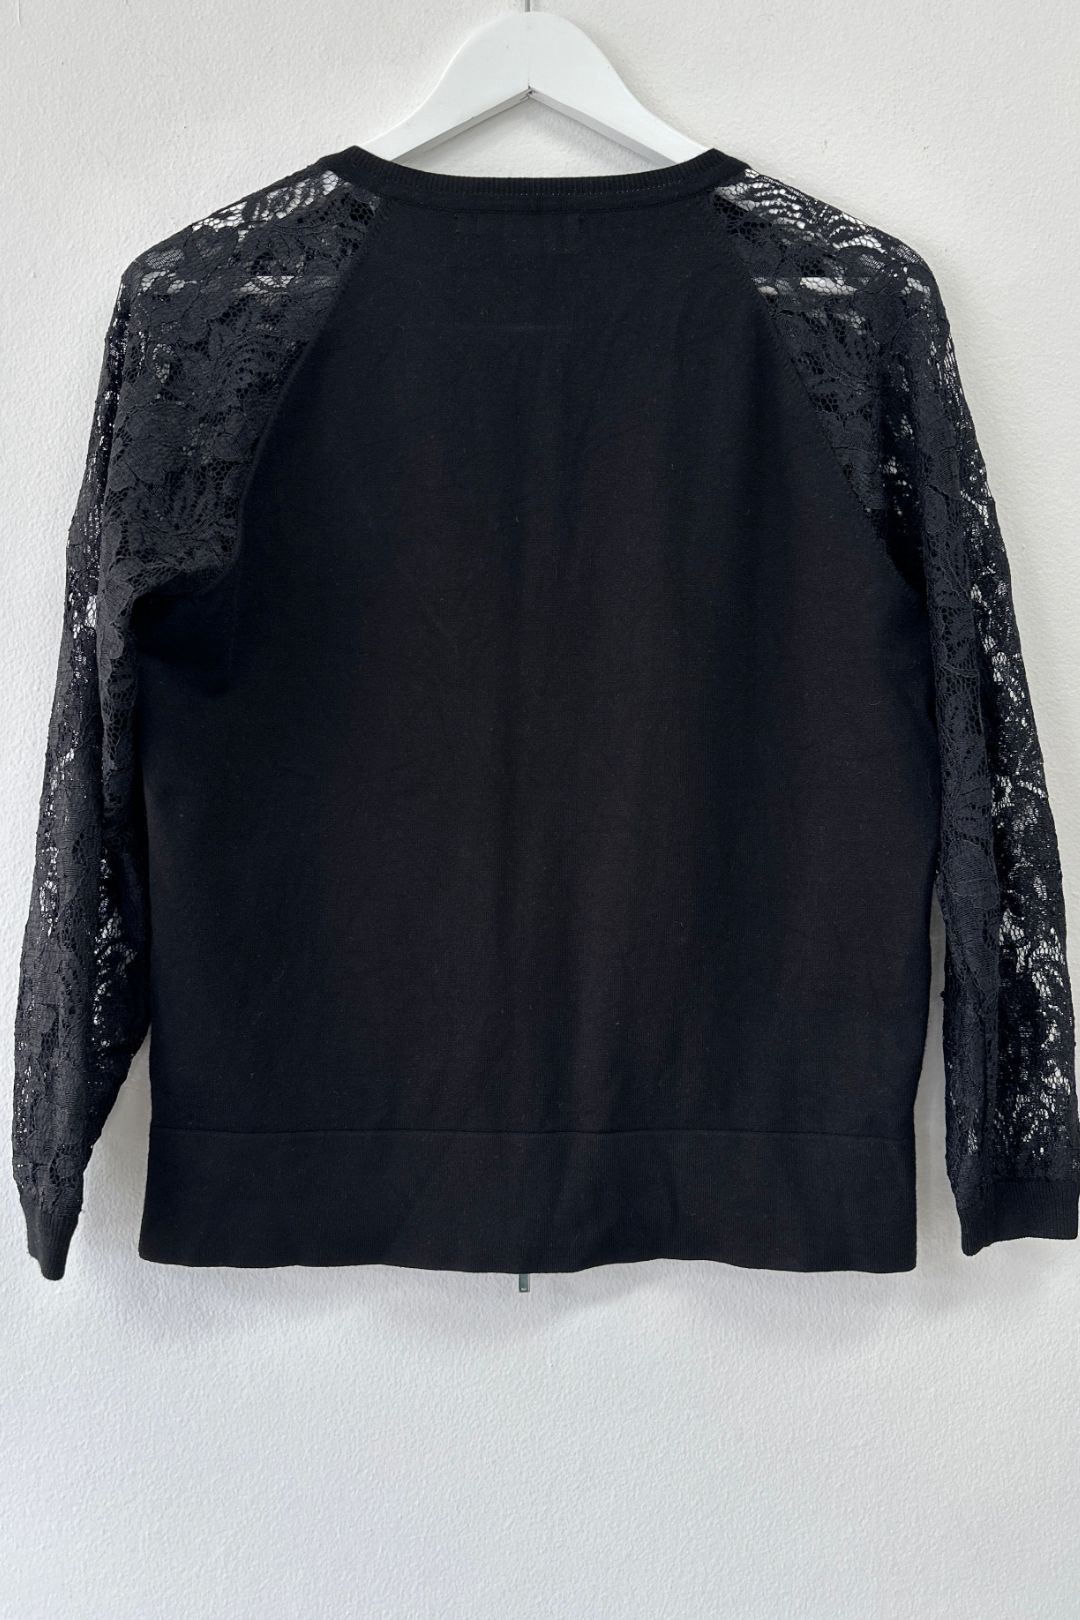 Karen Millen - Black Knitted Lace Cardigan